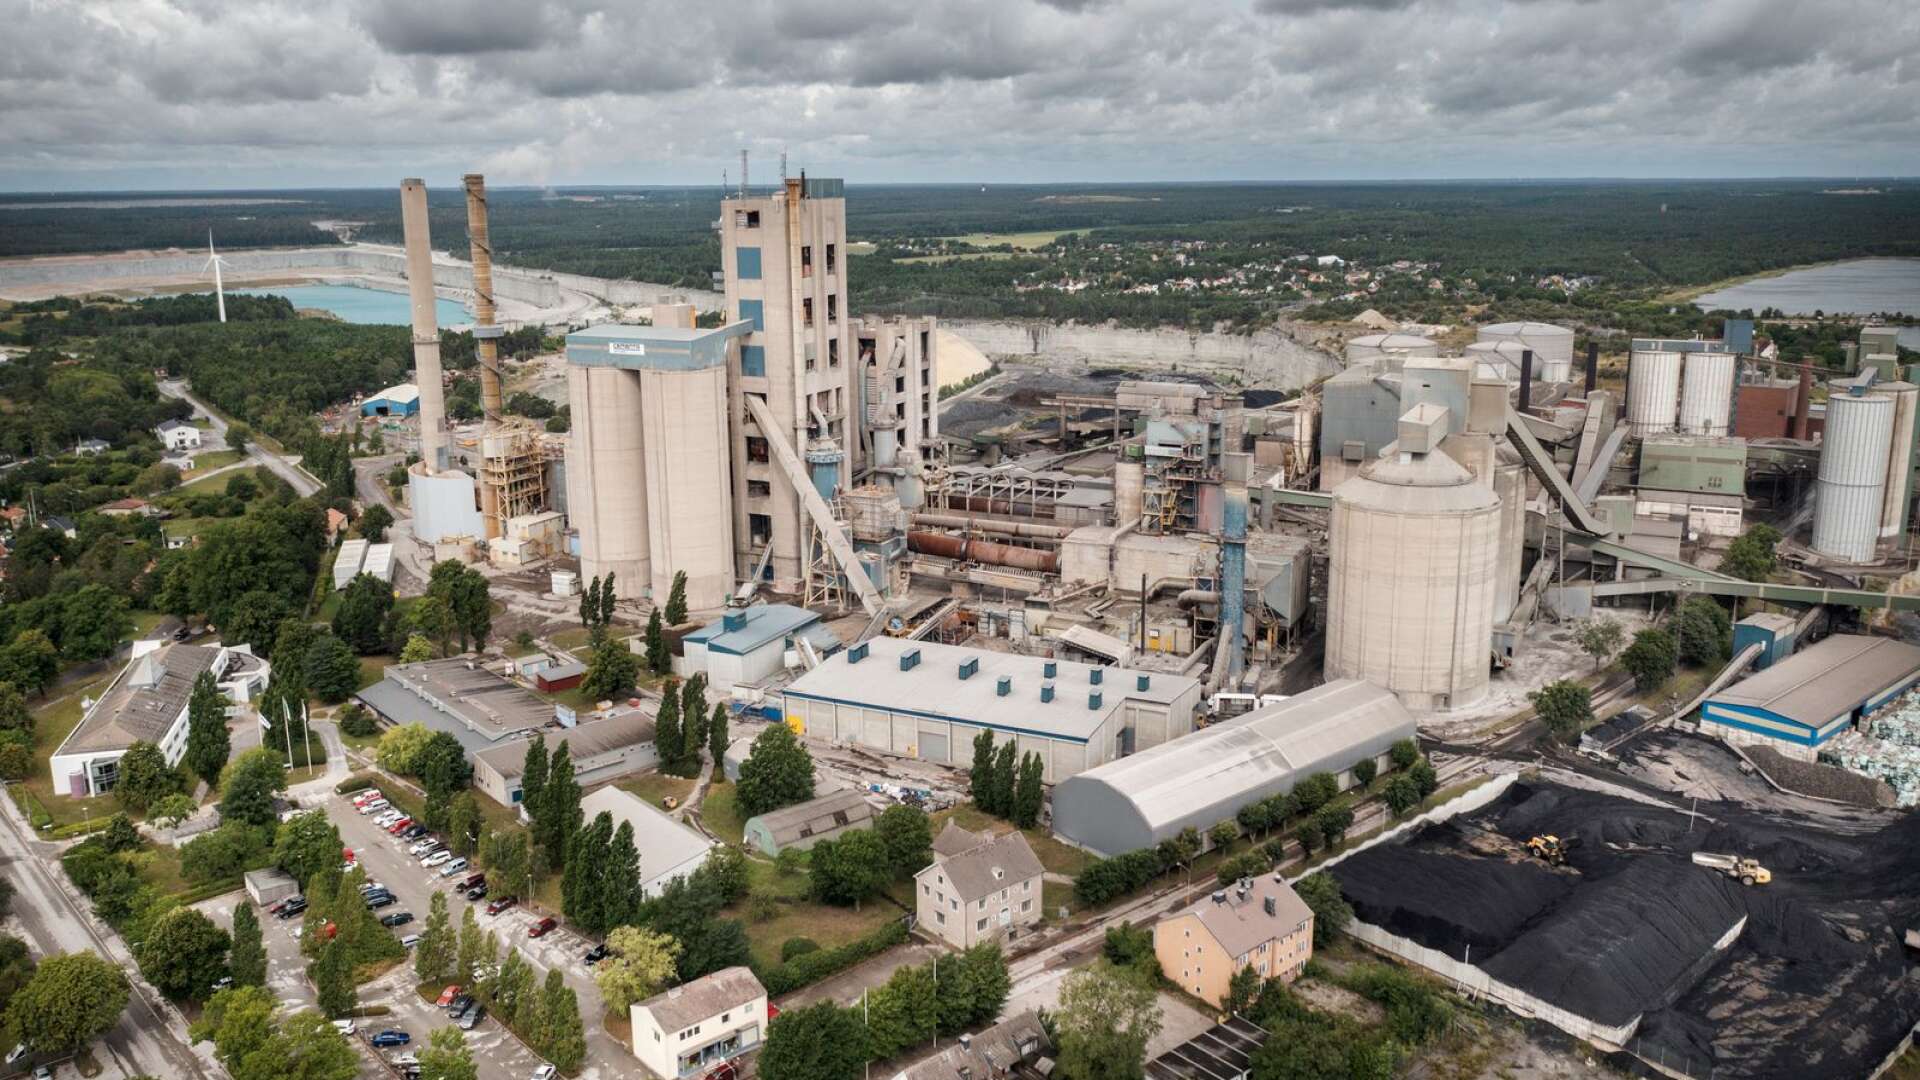 Cementas fabrik i Slite, med kalkbrott i bakgrunden.